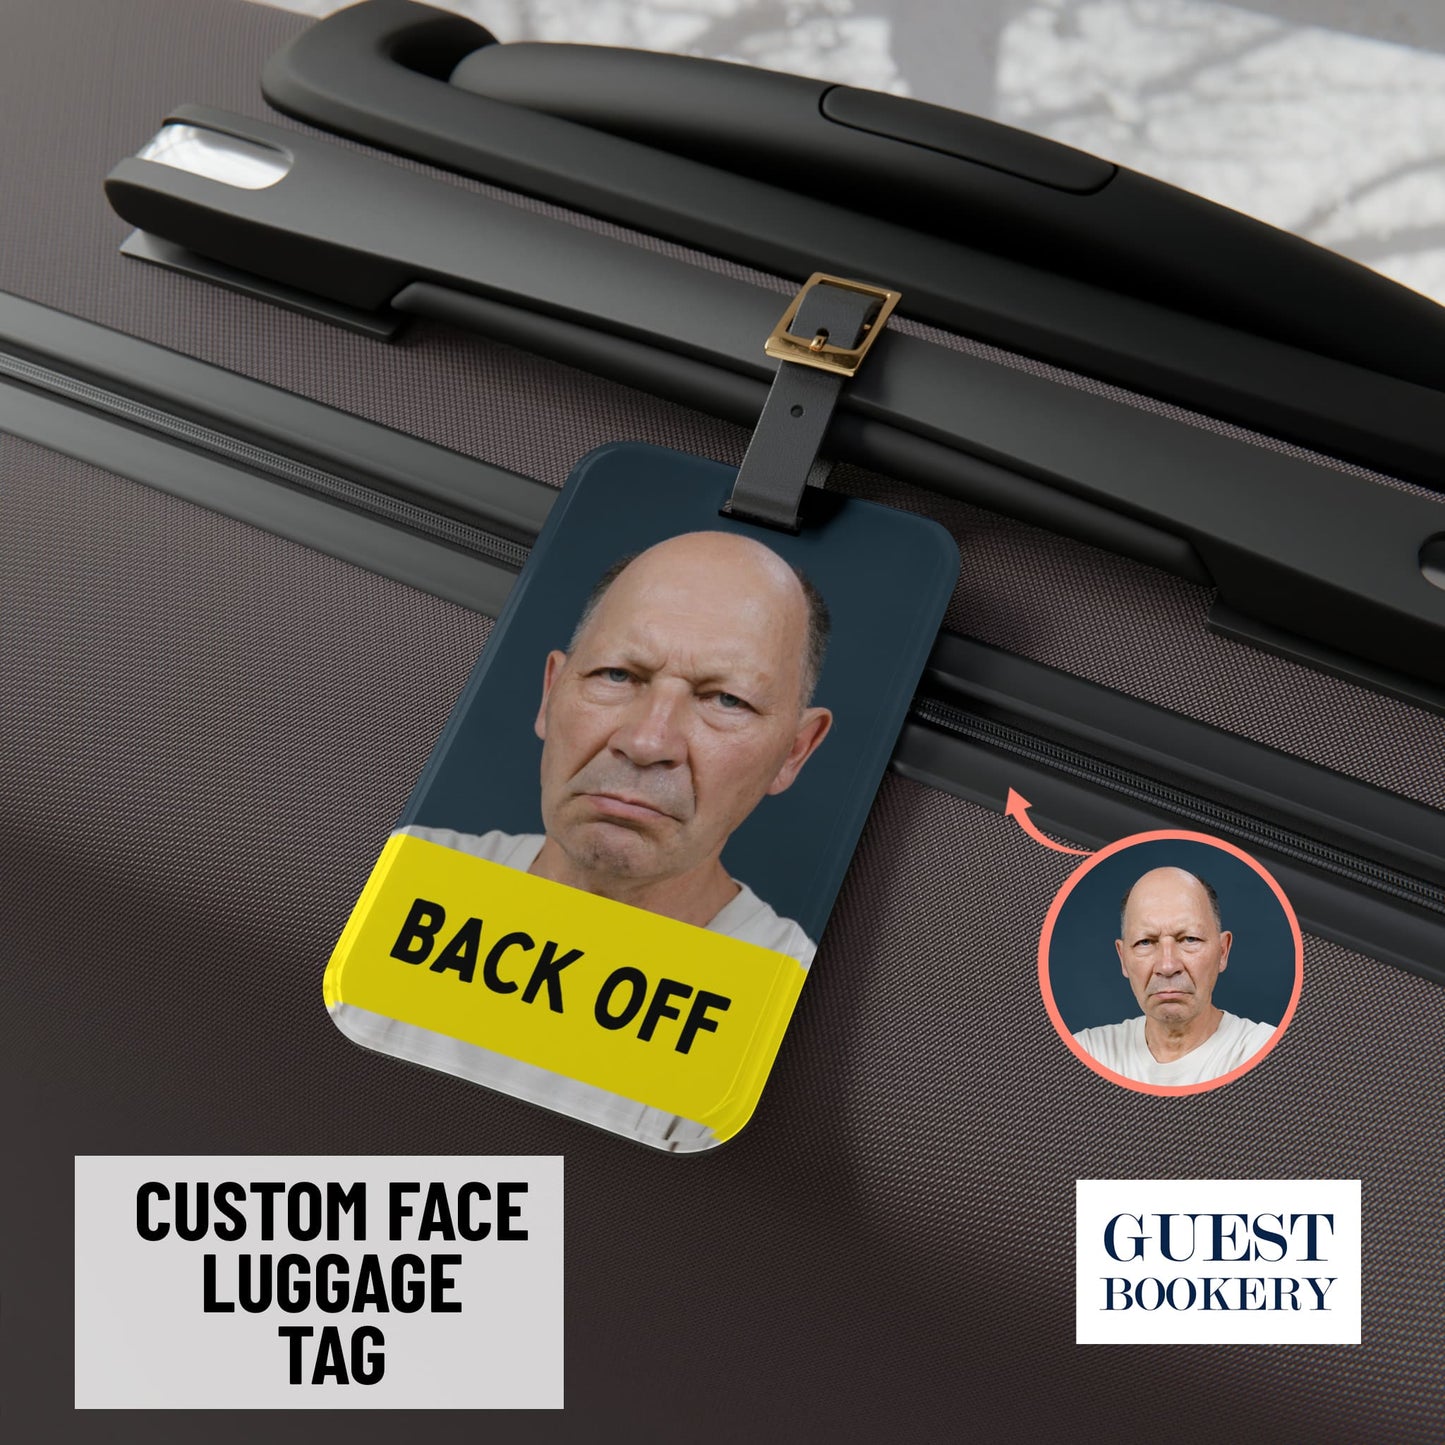 Custom Face Luggage Tag - Back Off